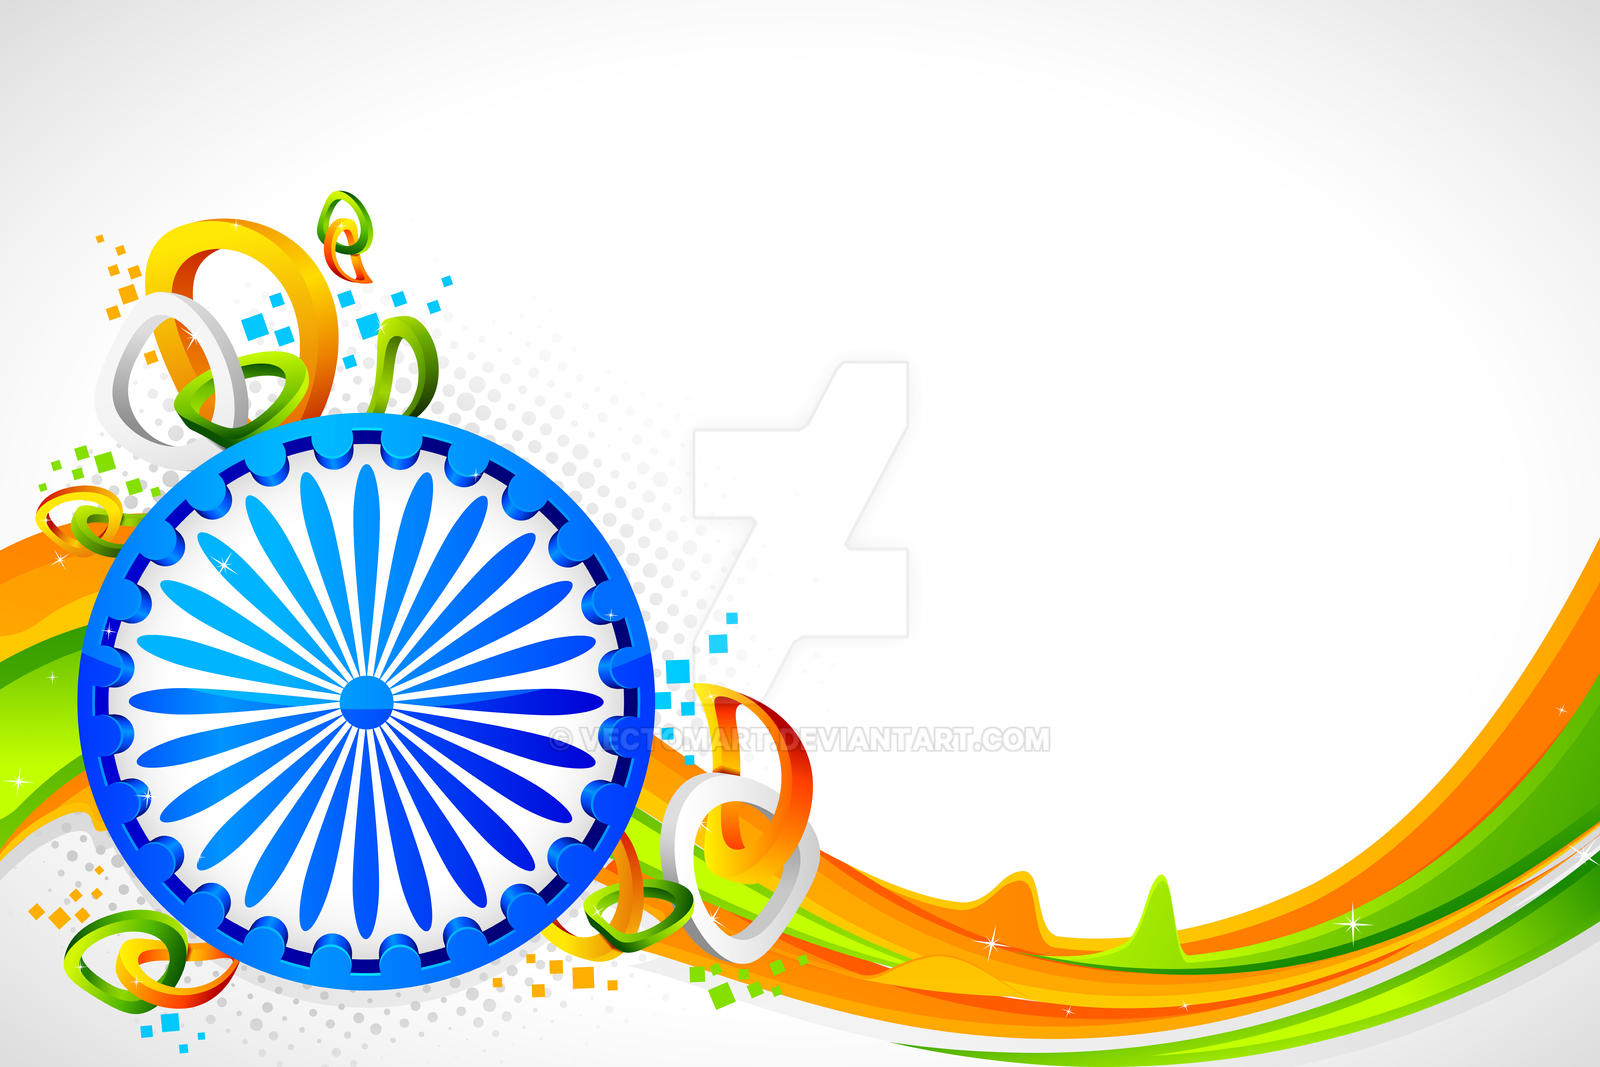 Ashok Wheel on Tricolor Background by vectomart on DeviantArt